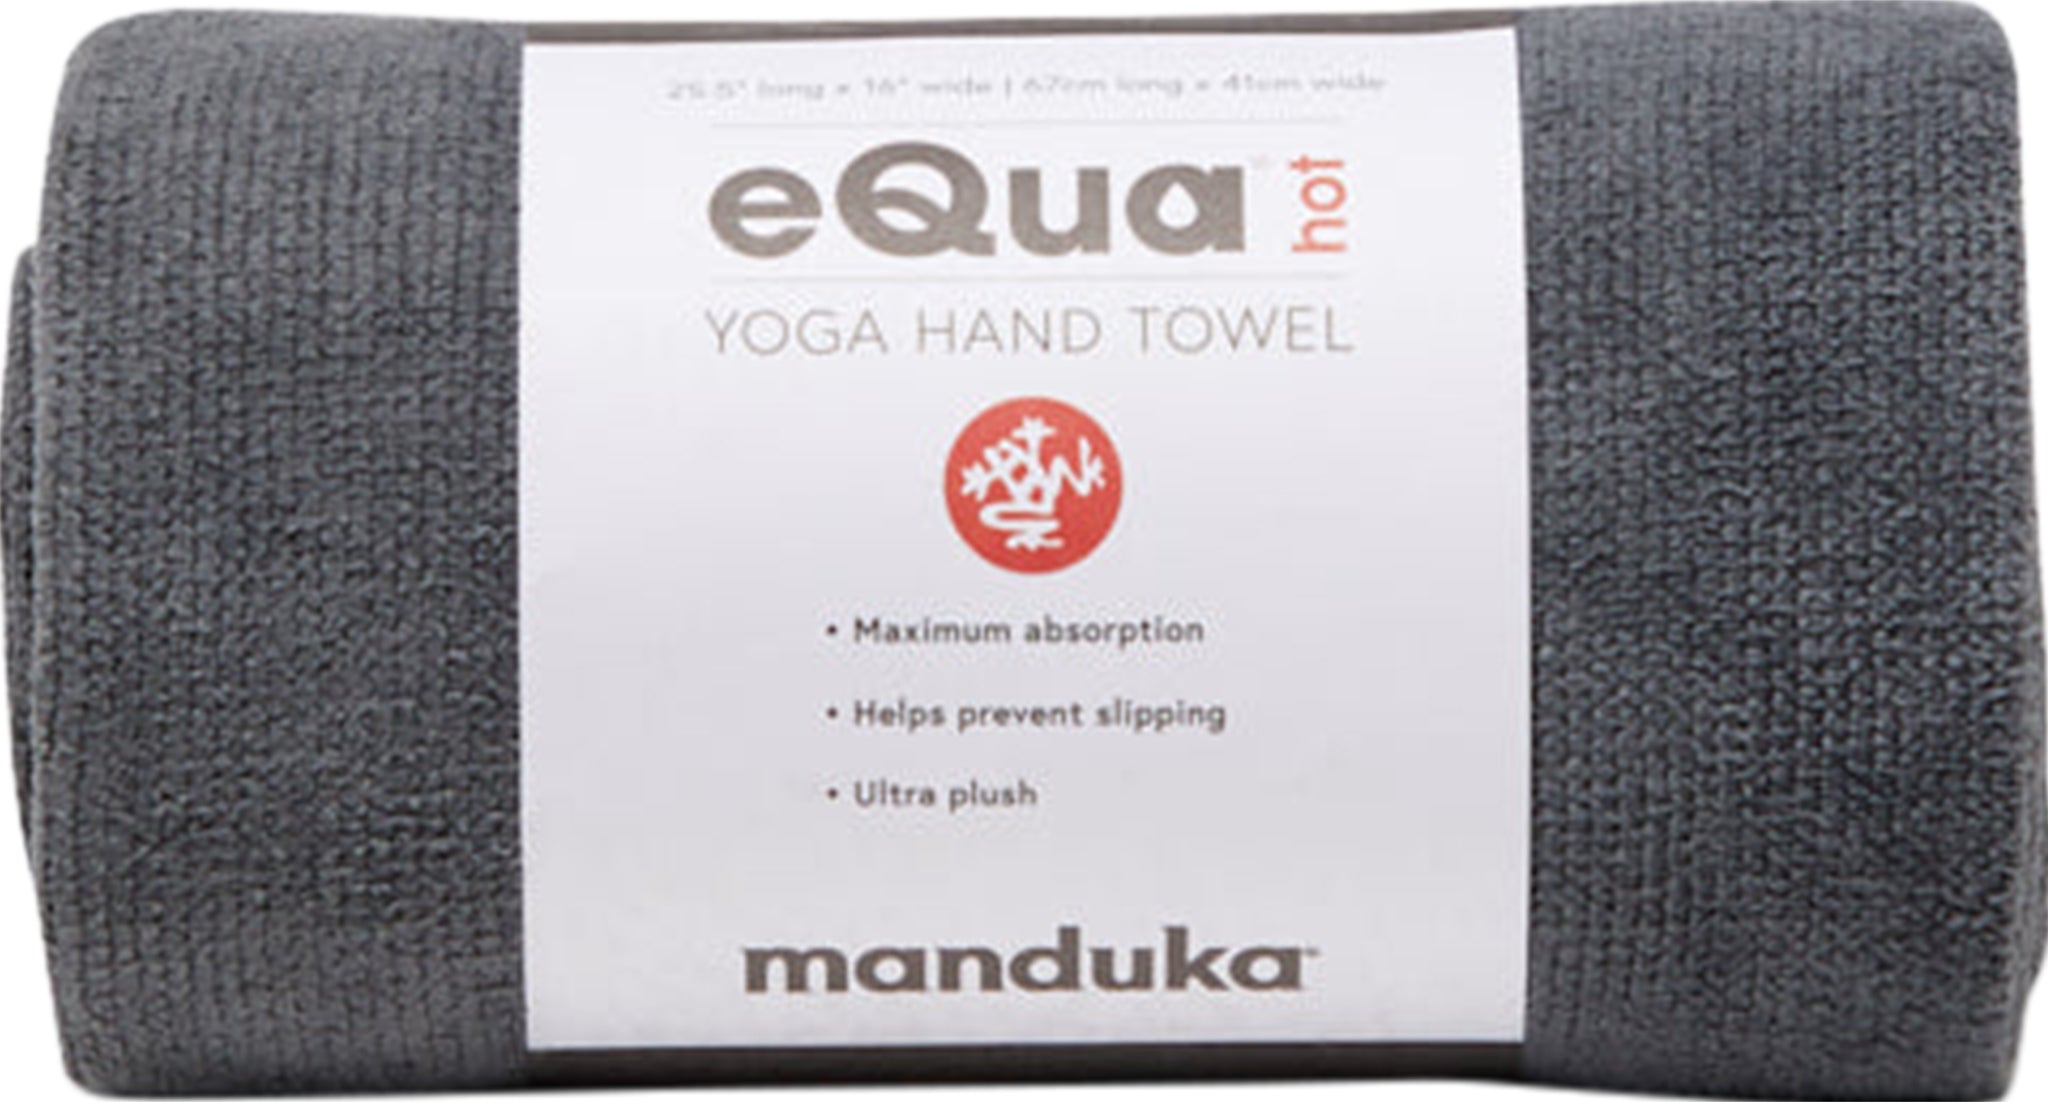 Manduka】eQua Hand Towel Yoga Hand Towel-Anise (wet and non-slip